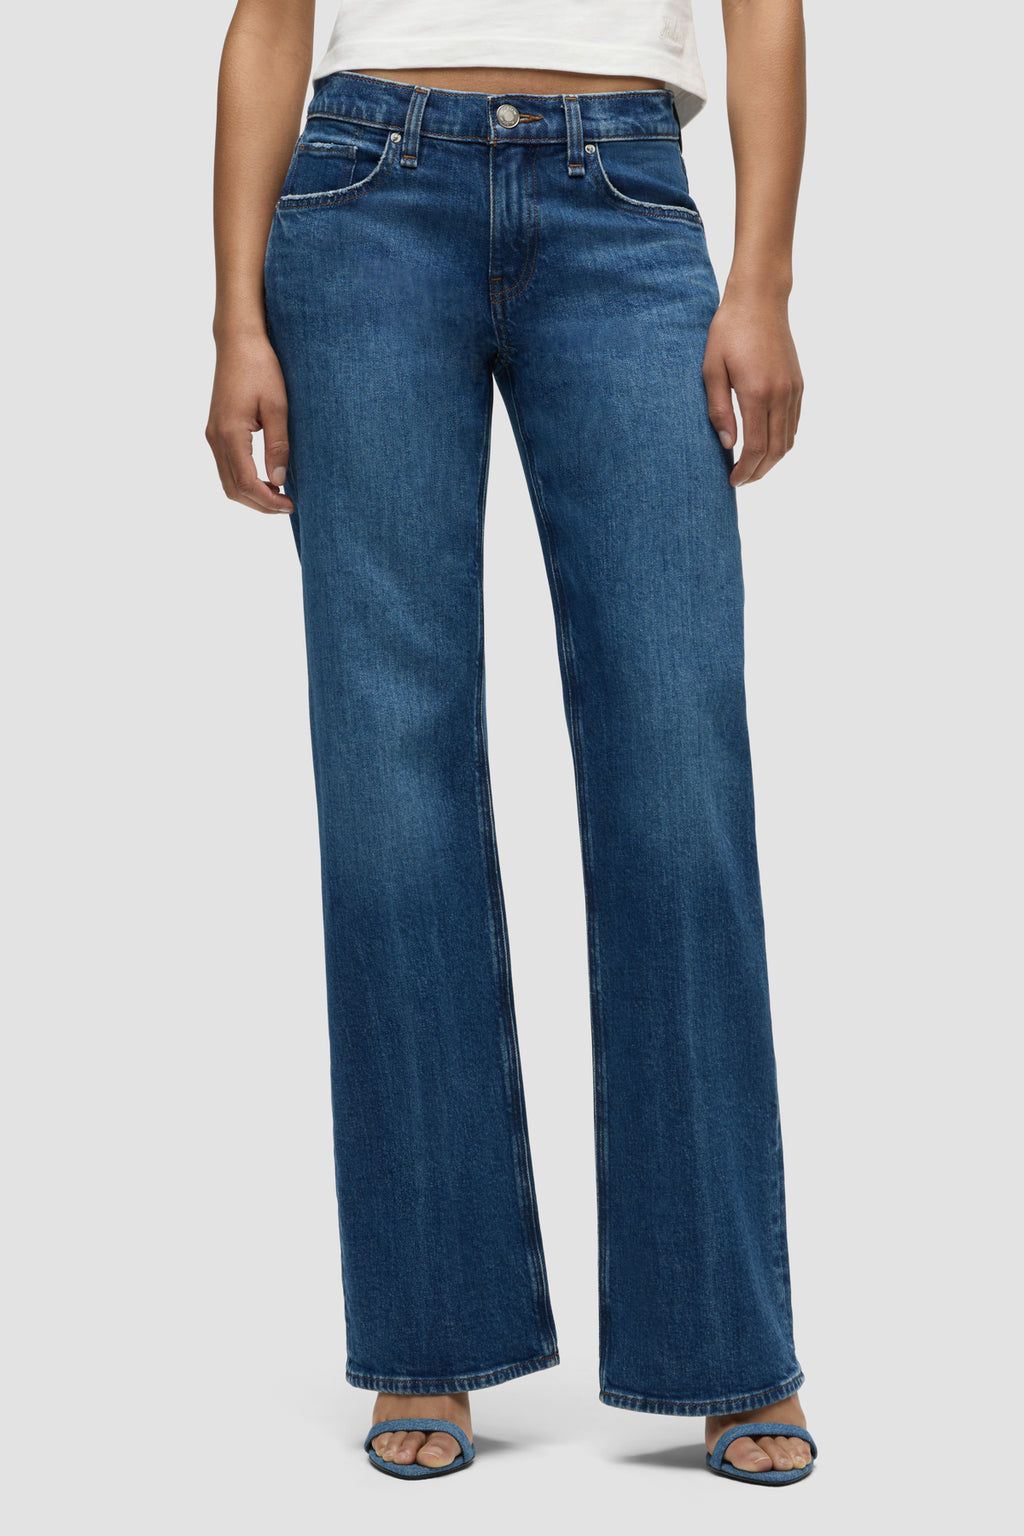 HOT! Tons of Hudson jeans under $100!! - Mint Arrow